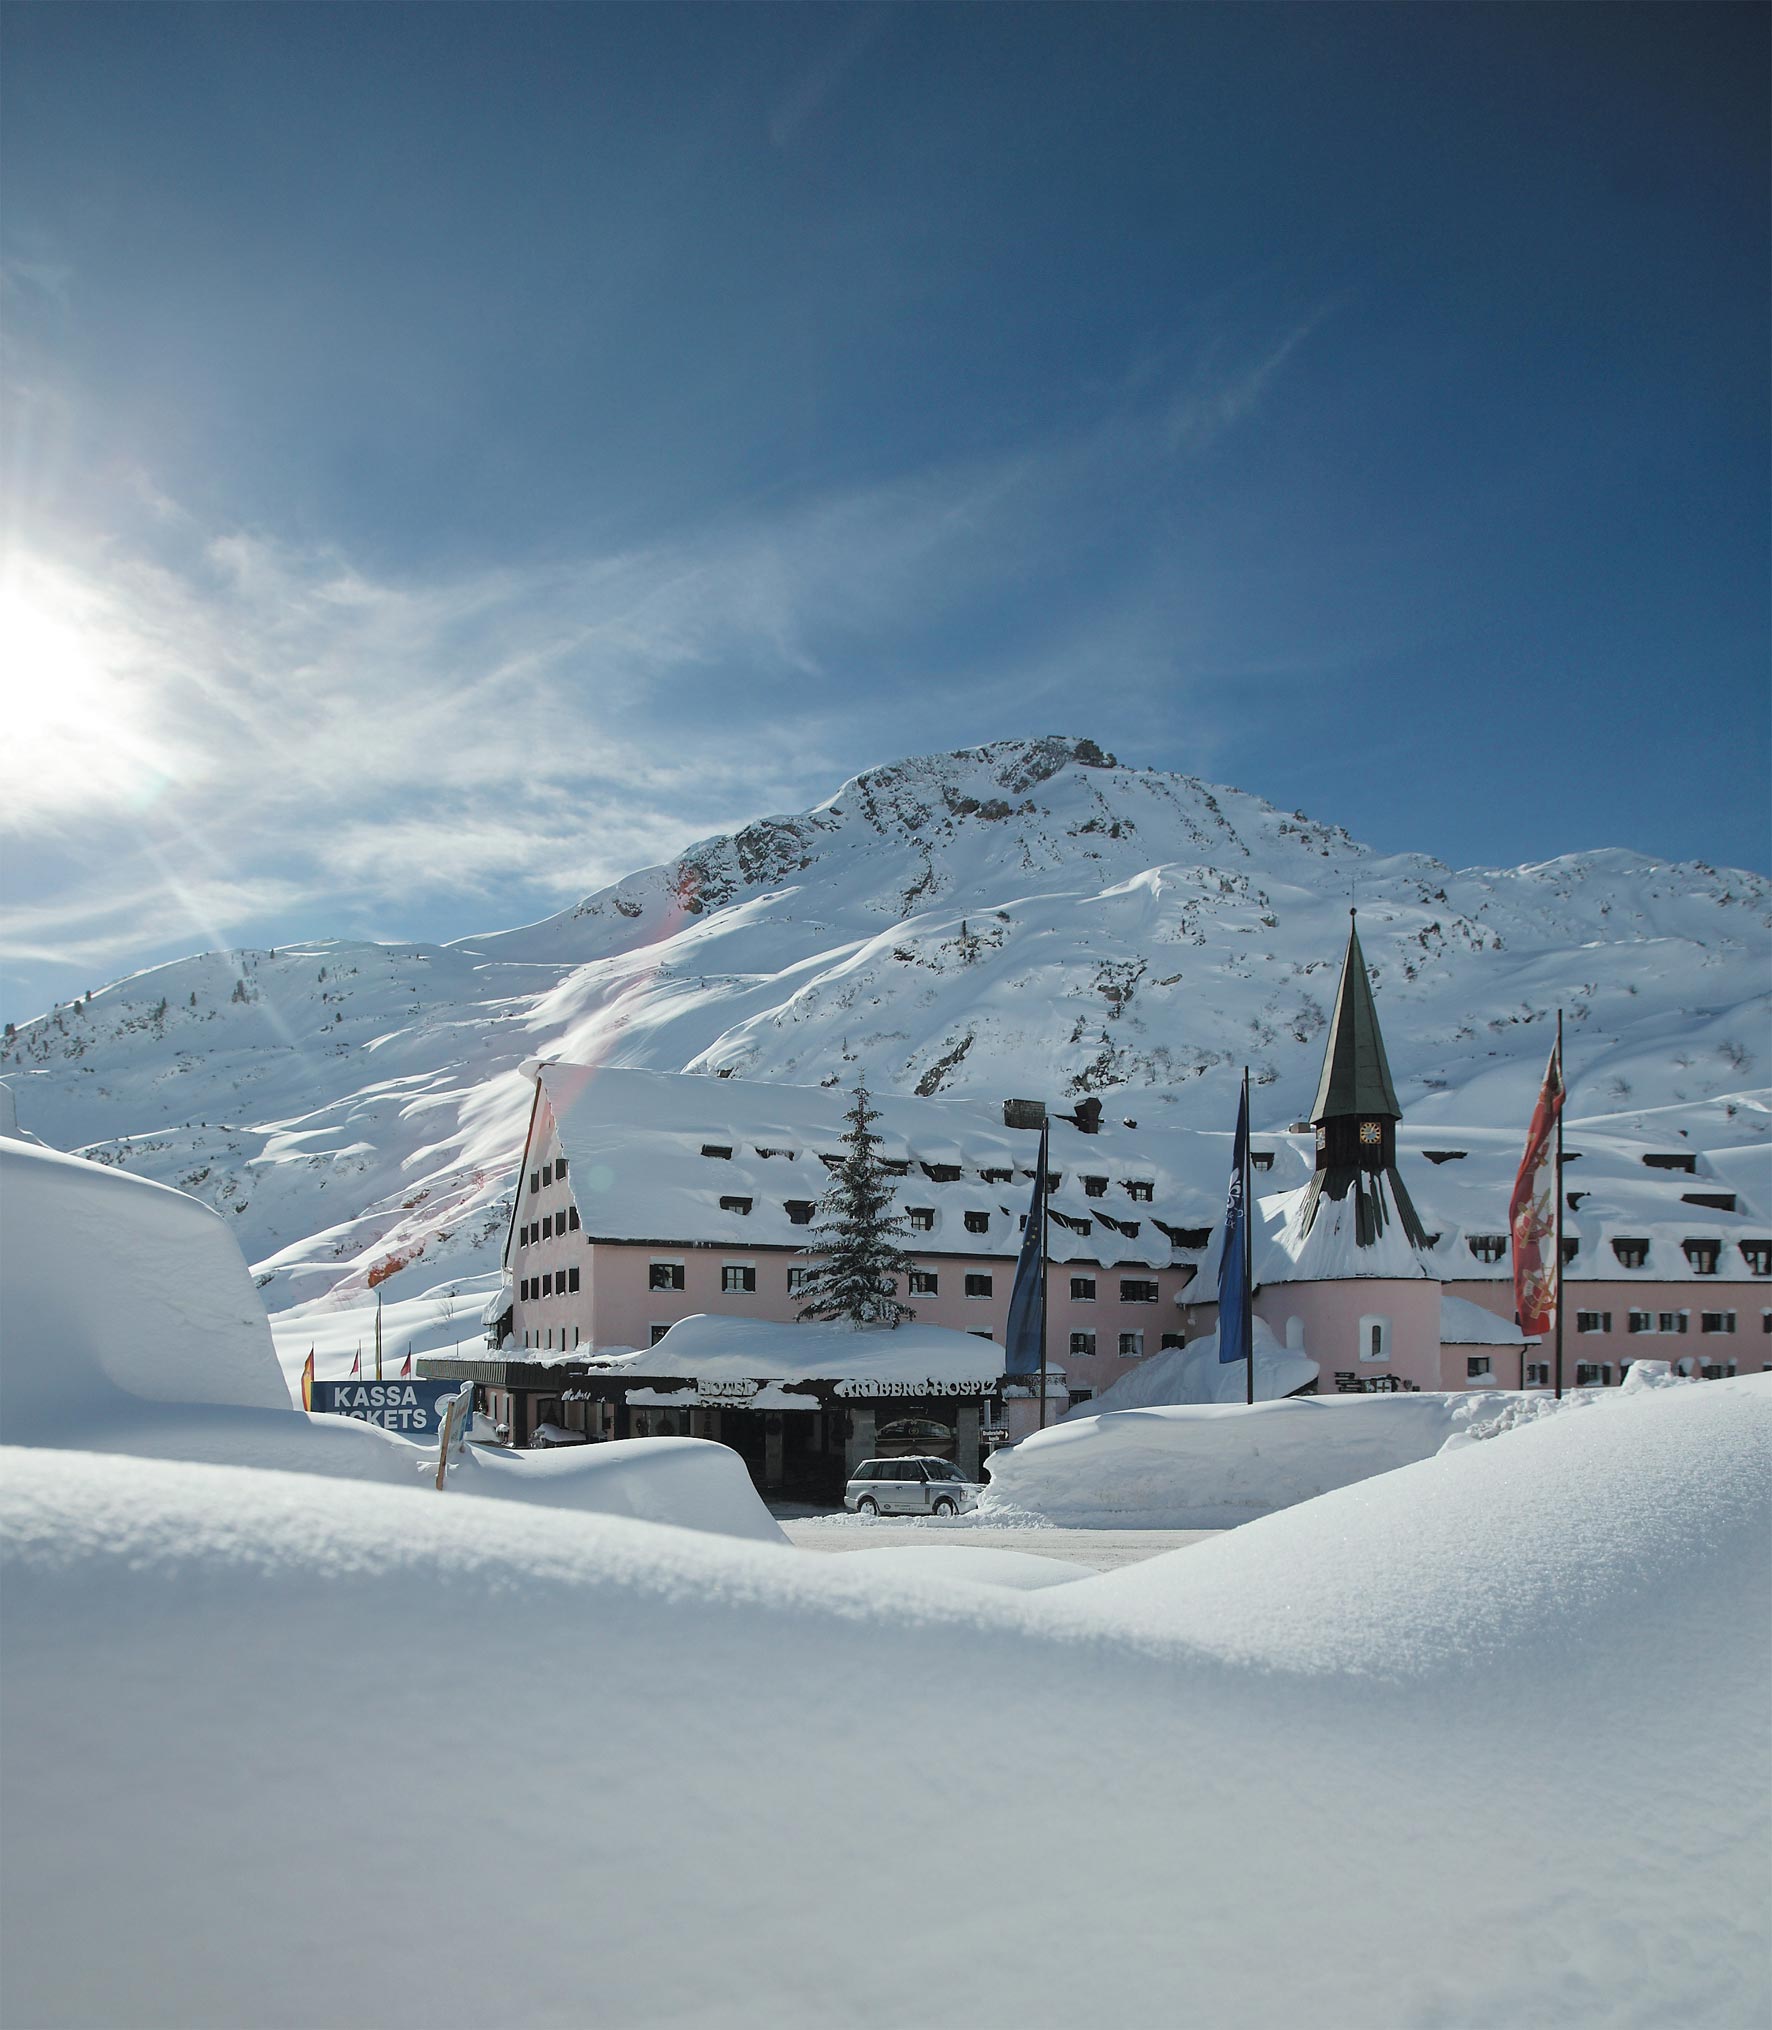 Arlberg 1800 Resort Aussenansicht   Arlberg1800resort  1  01 ?mode=max&rnd=132488618460000000